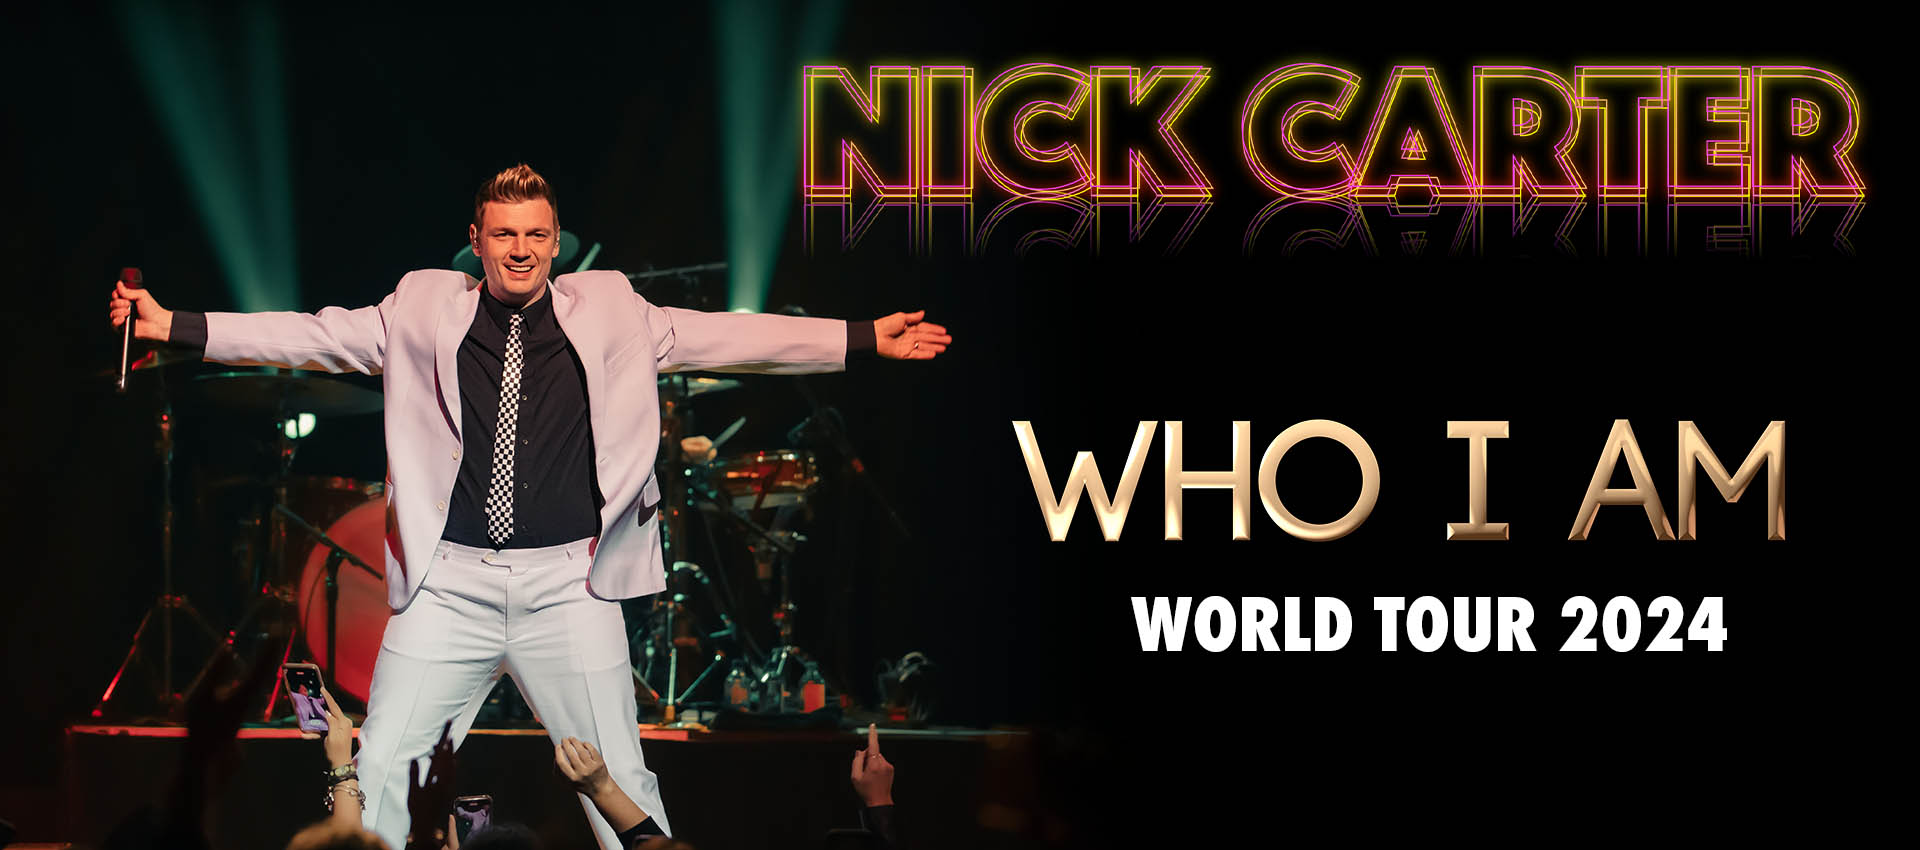 Nick Carter - Who I Am Tour at Commodore Ballroom Tickets